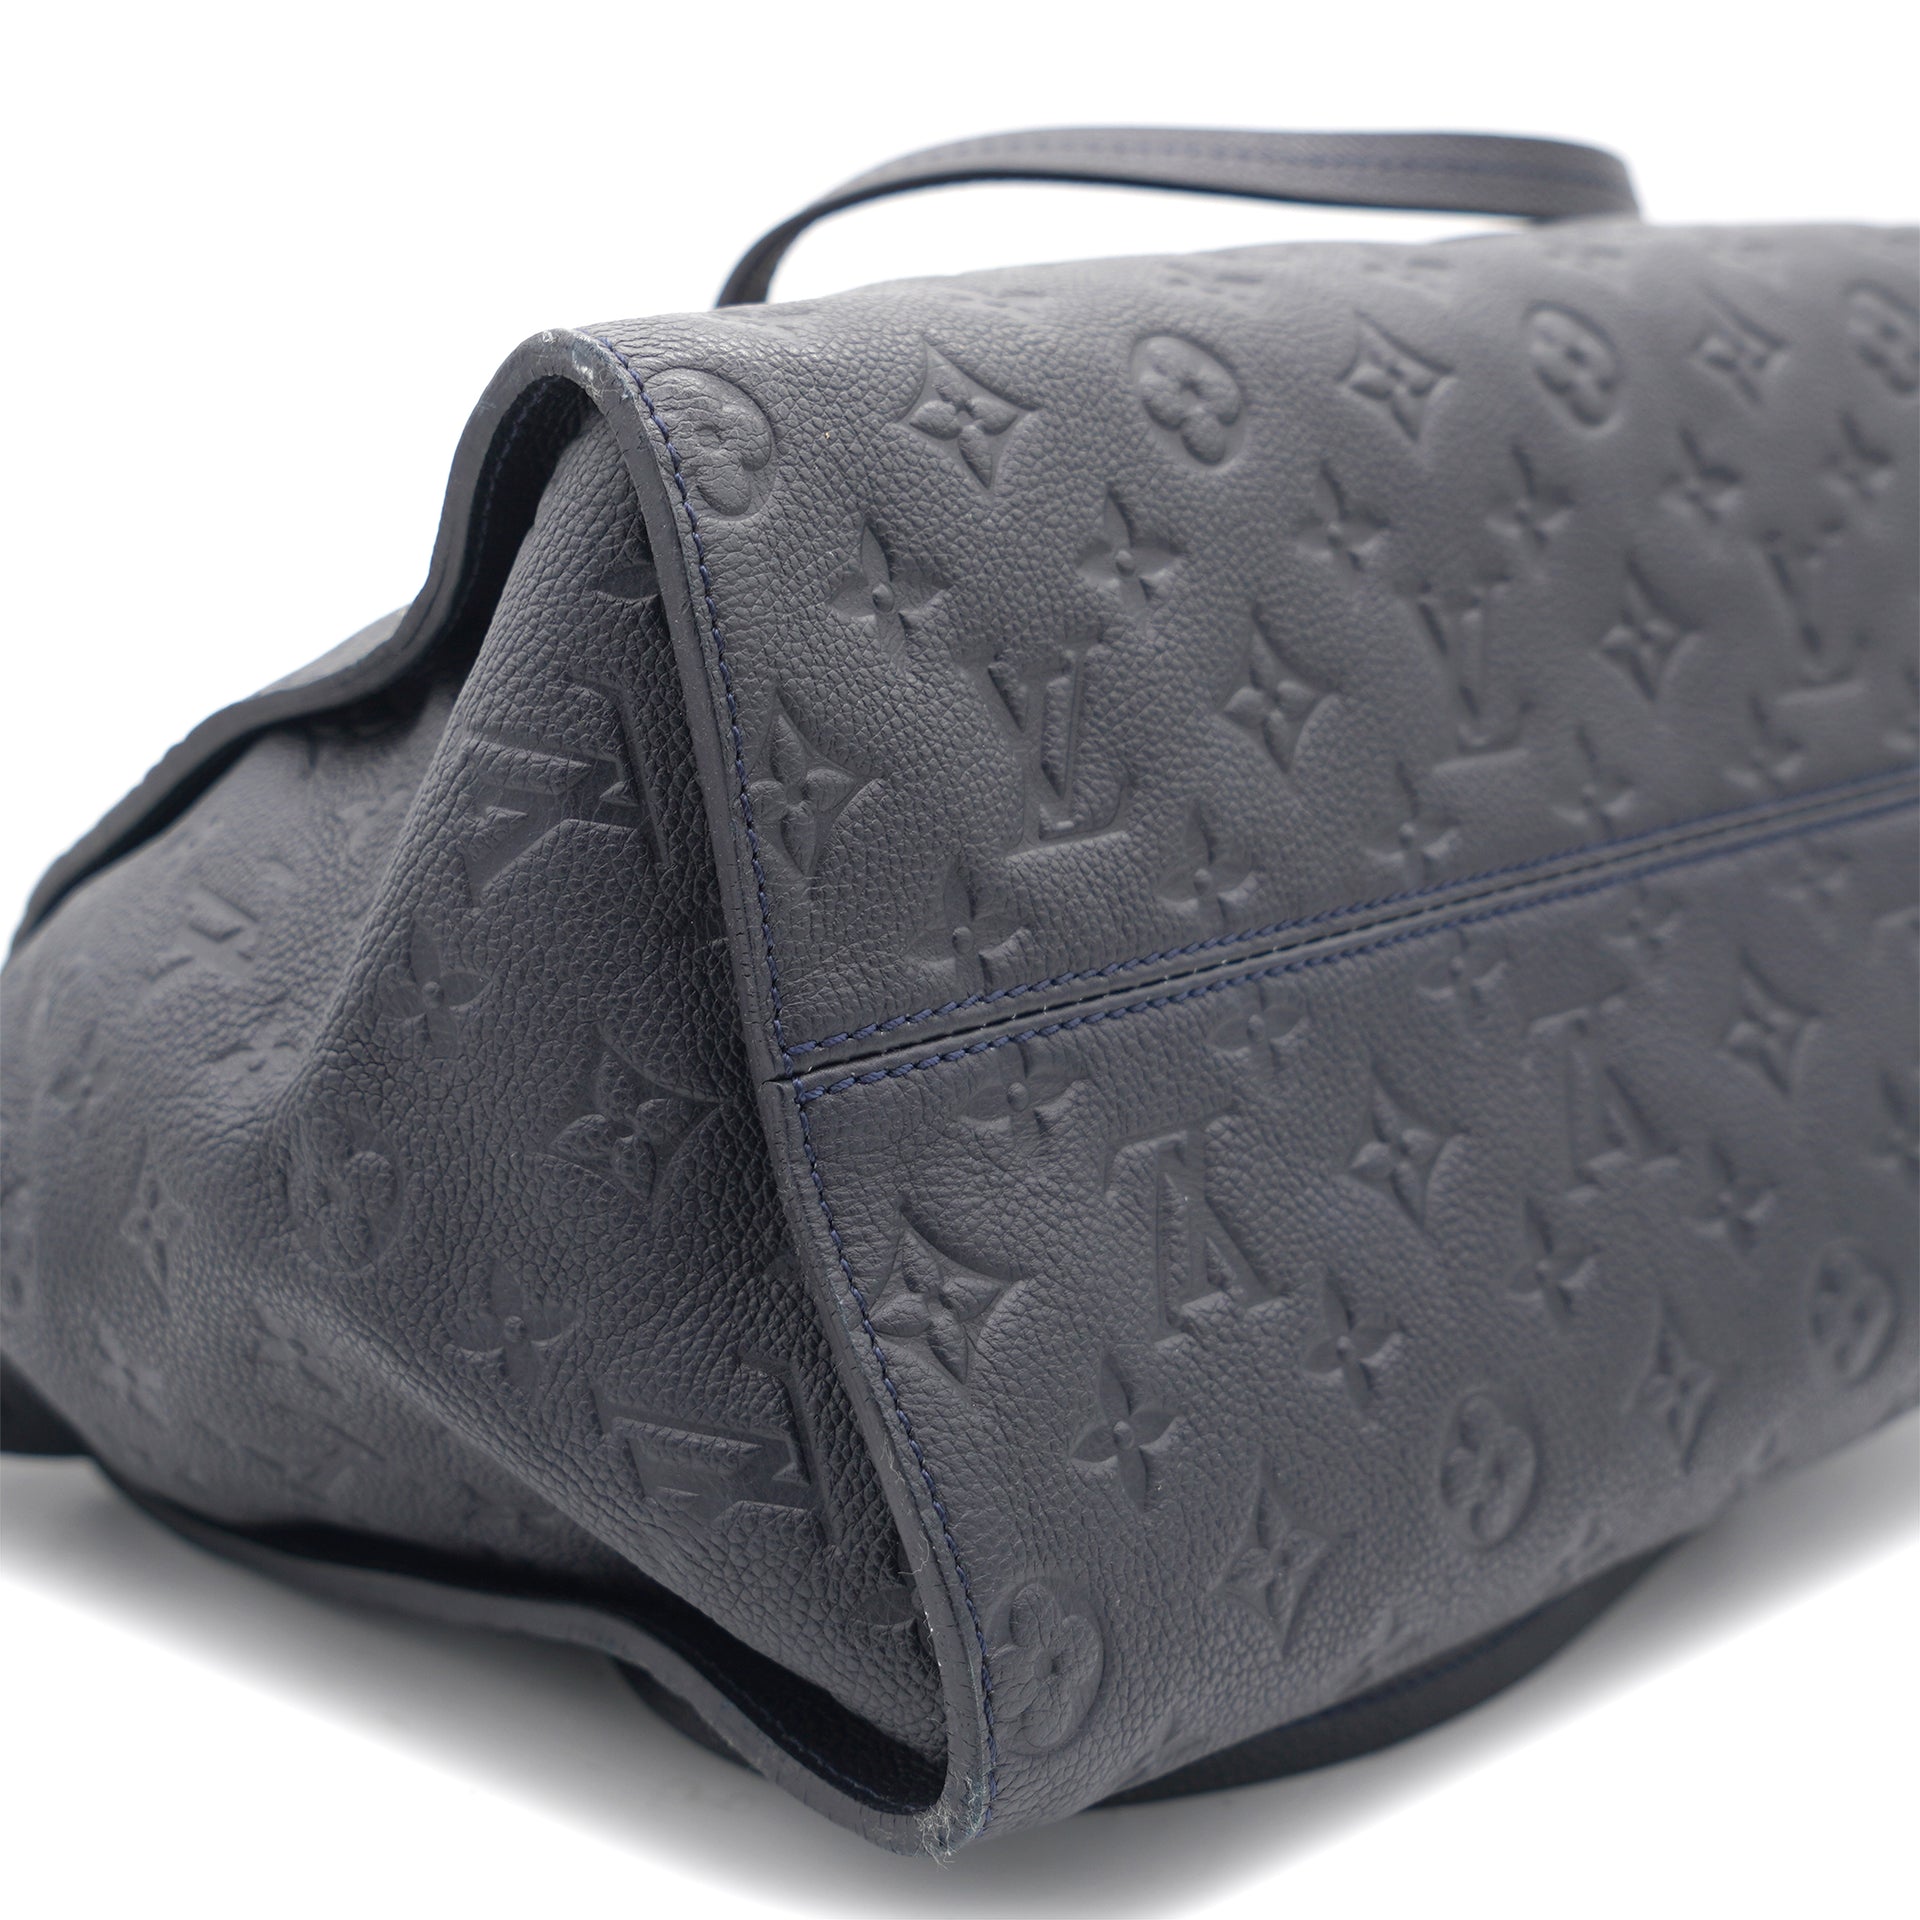 Louis Vuitton Lumineuse PM in Empreinte Terre  Louis vuitton handbags,  Expensive bag, Purses